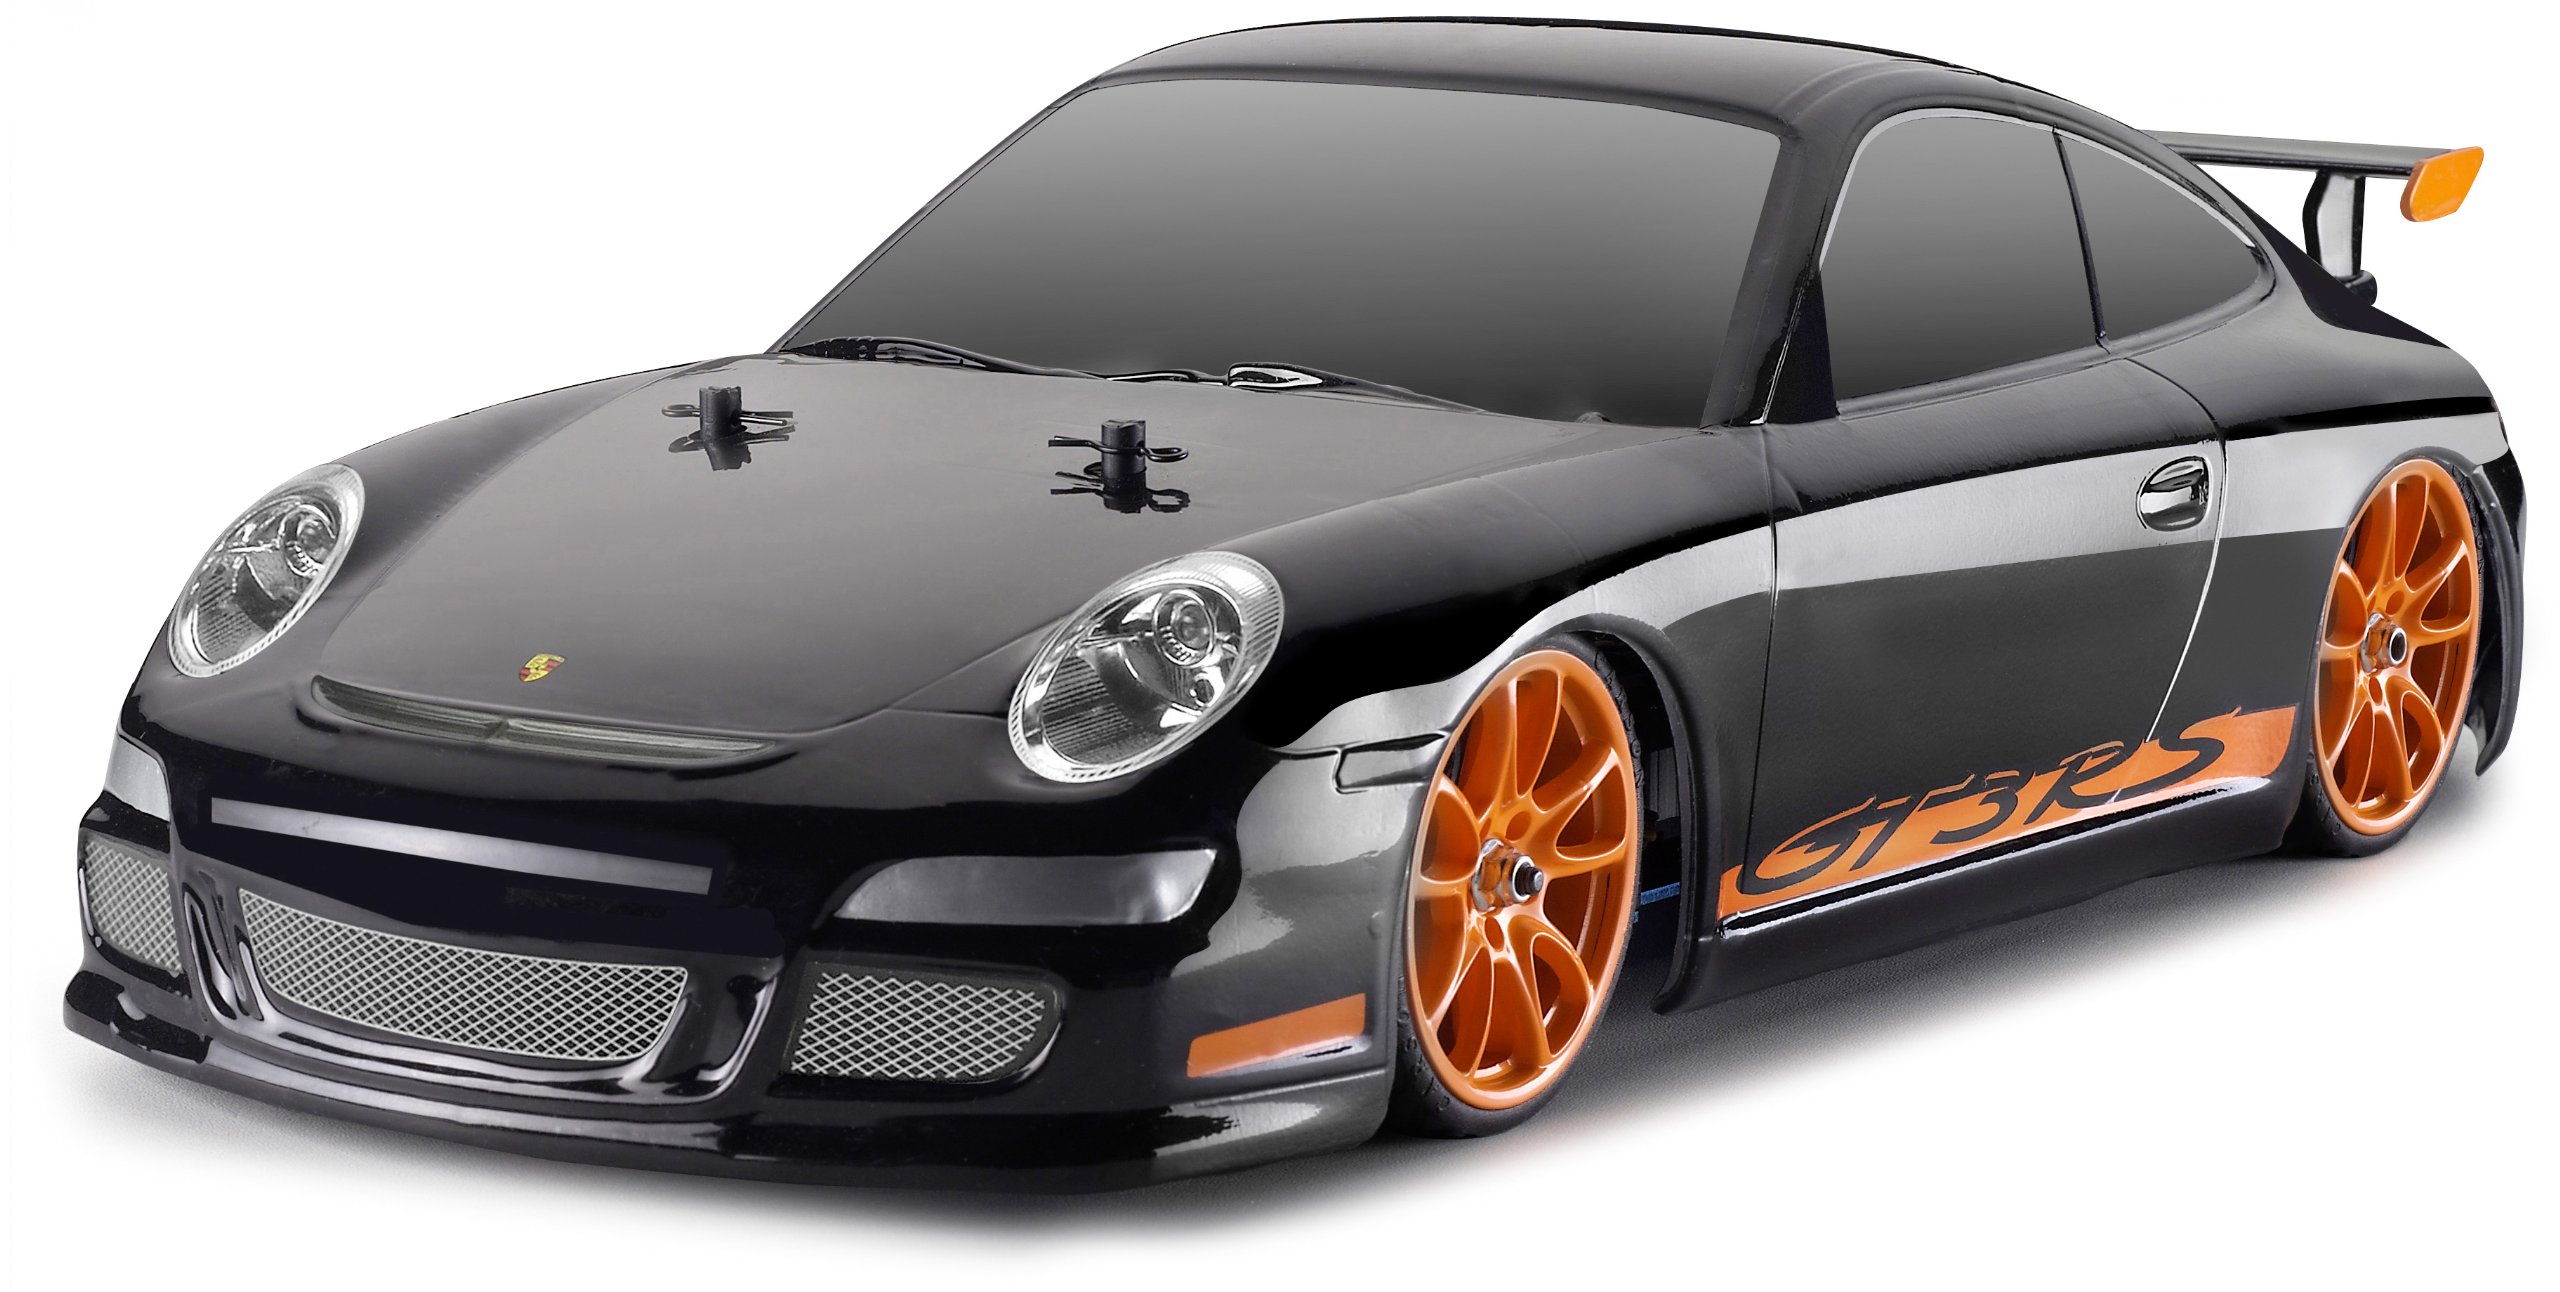 Carson Chassis Porsche Gt Includes Design